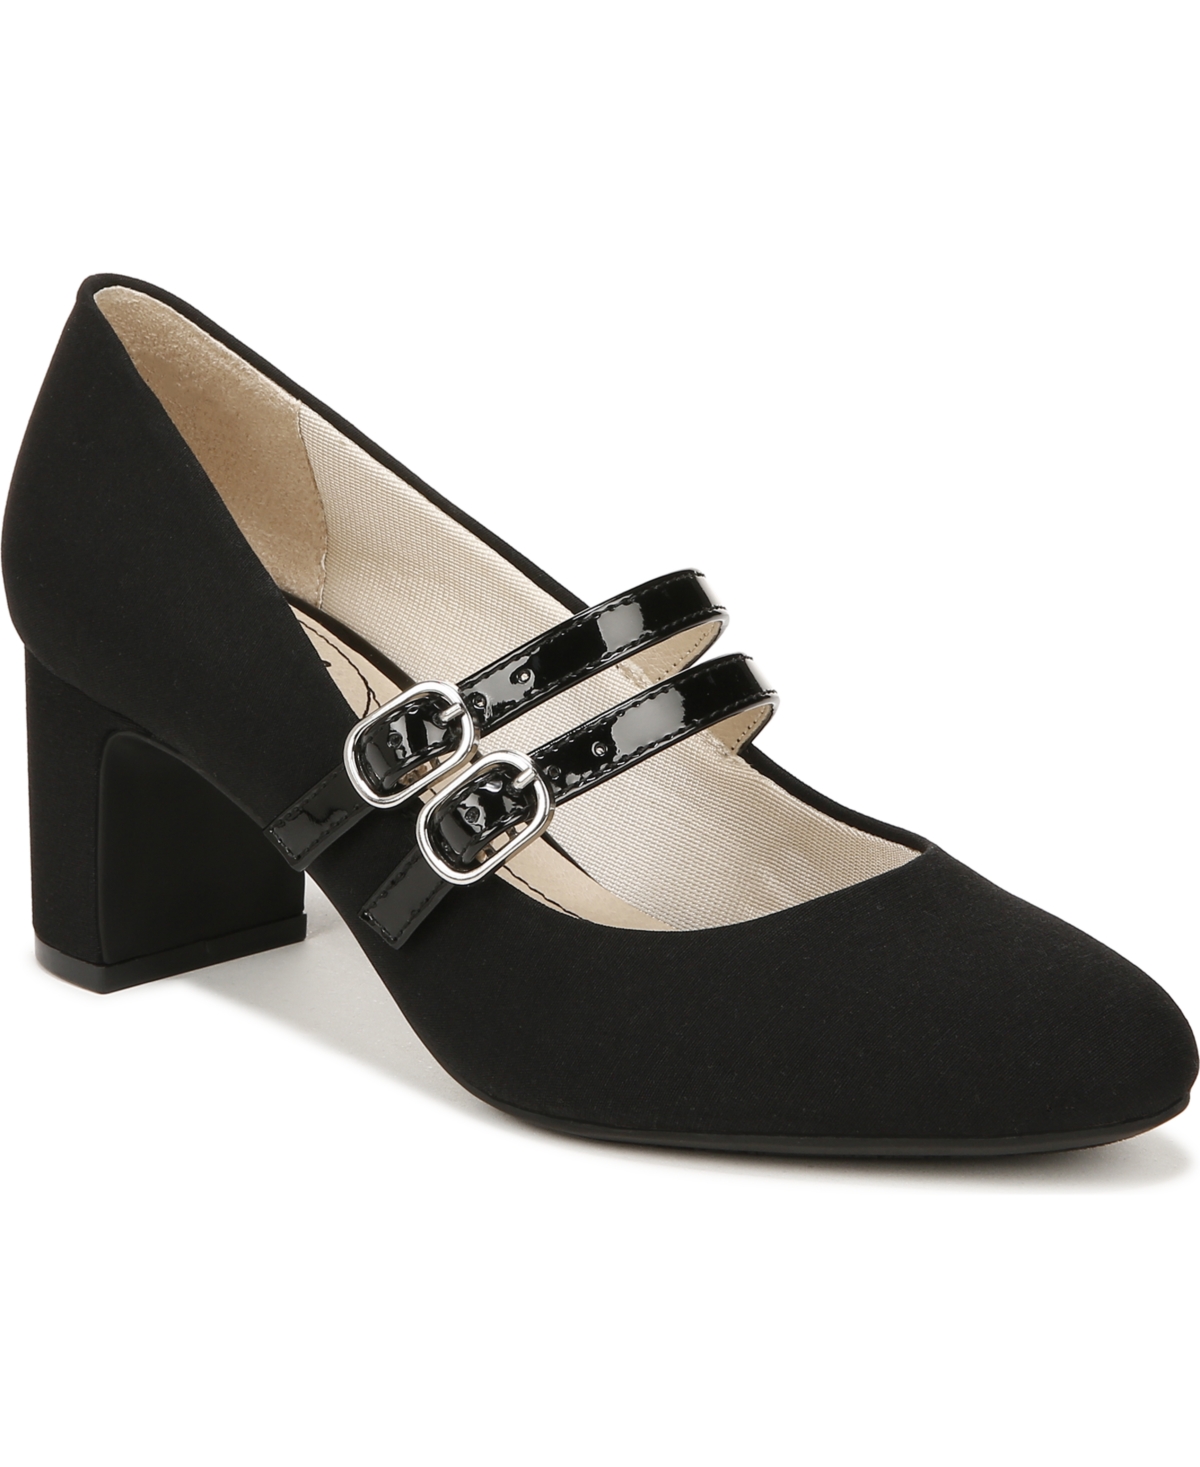 Vintage Shoes, Vintage Style Shoes LifeStride True Mary Jane Pumps - Black Micron $55.99 AT vintagedancer.com